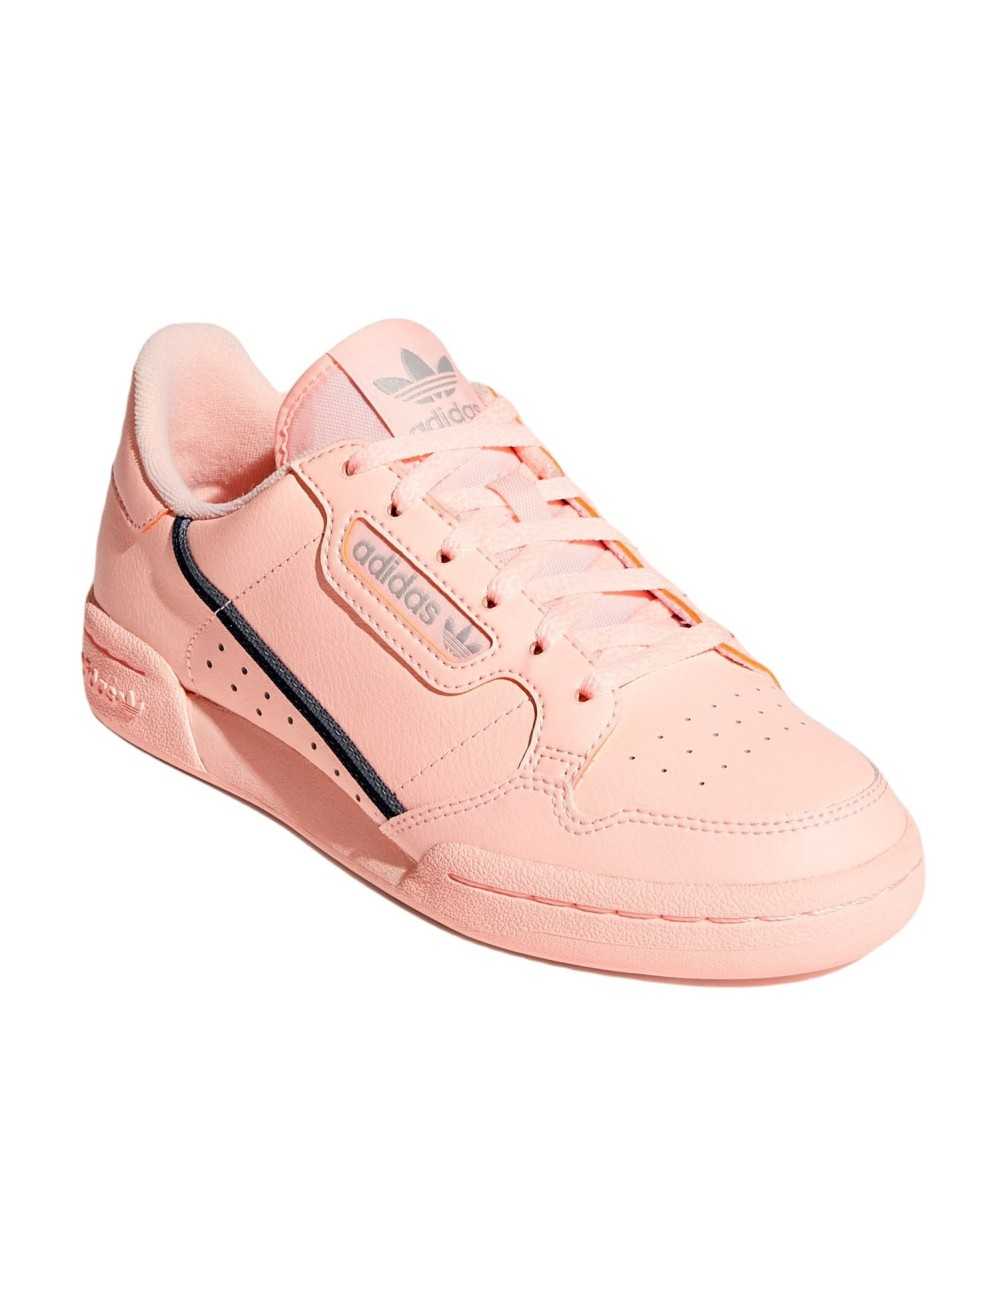 Scarpe Adidas Continental 80 J Pink in pelle - Scarpe Donna Sportive